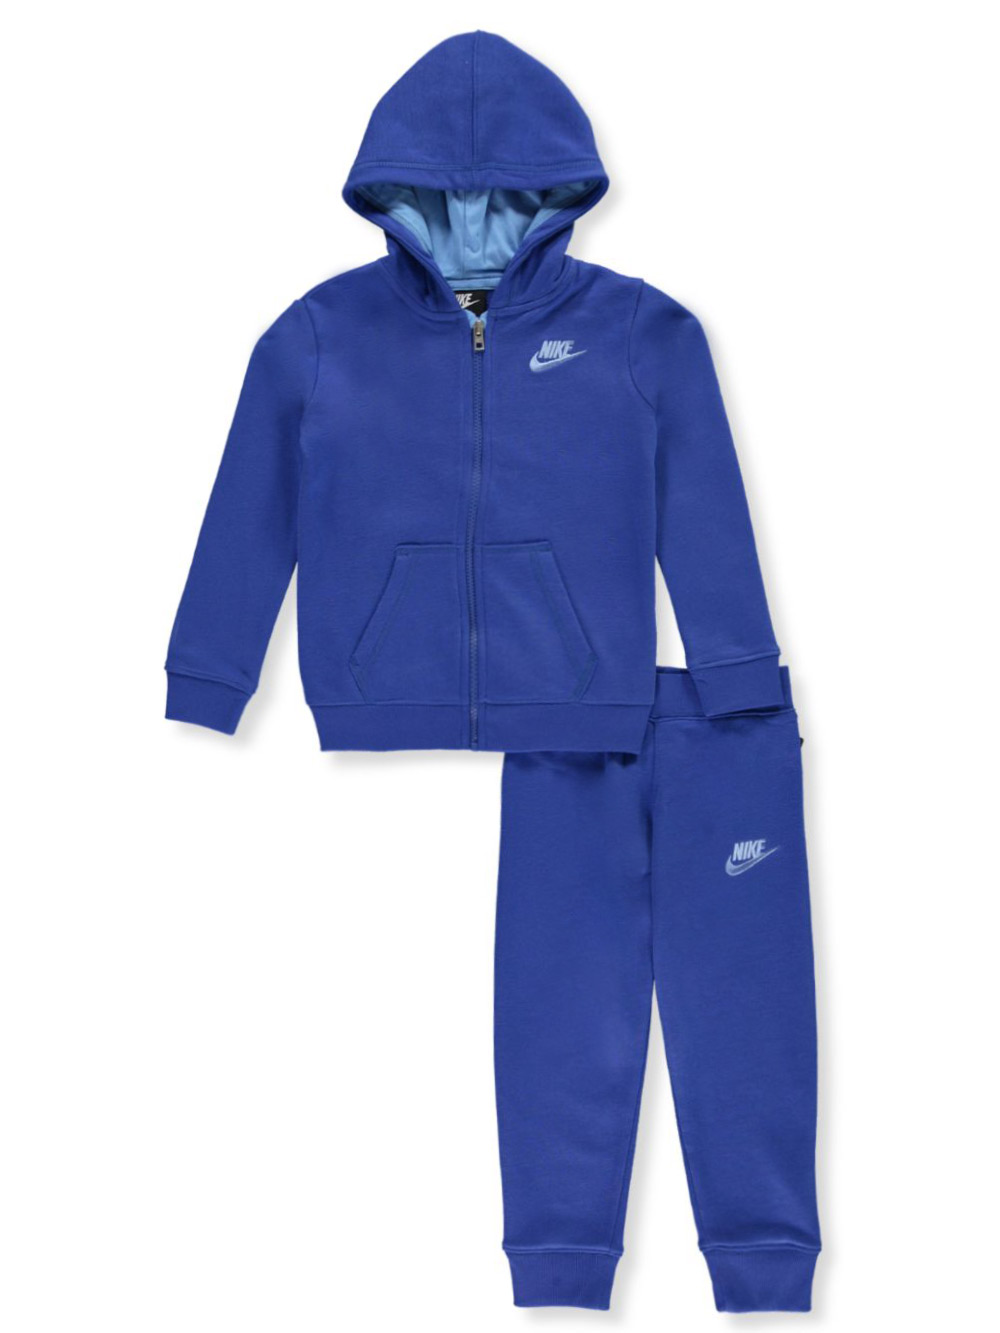 royal blue nike jogging suit